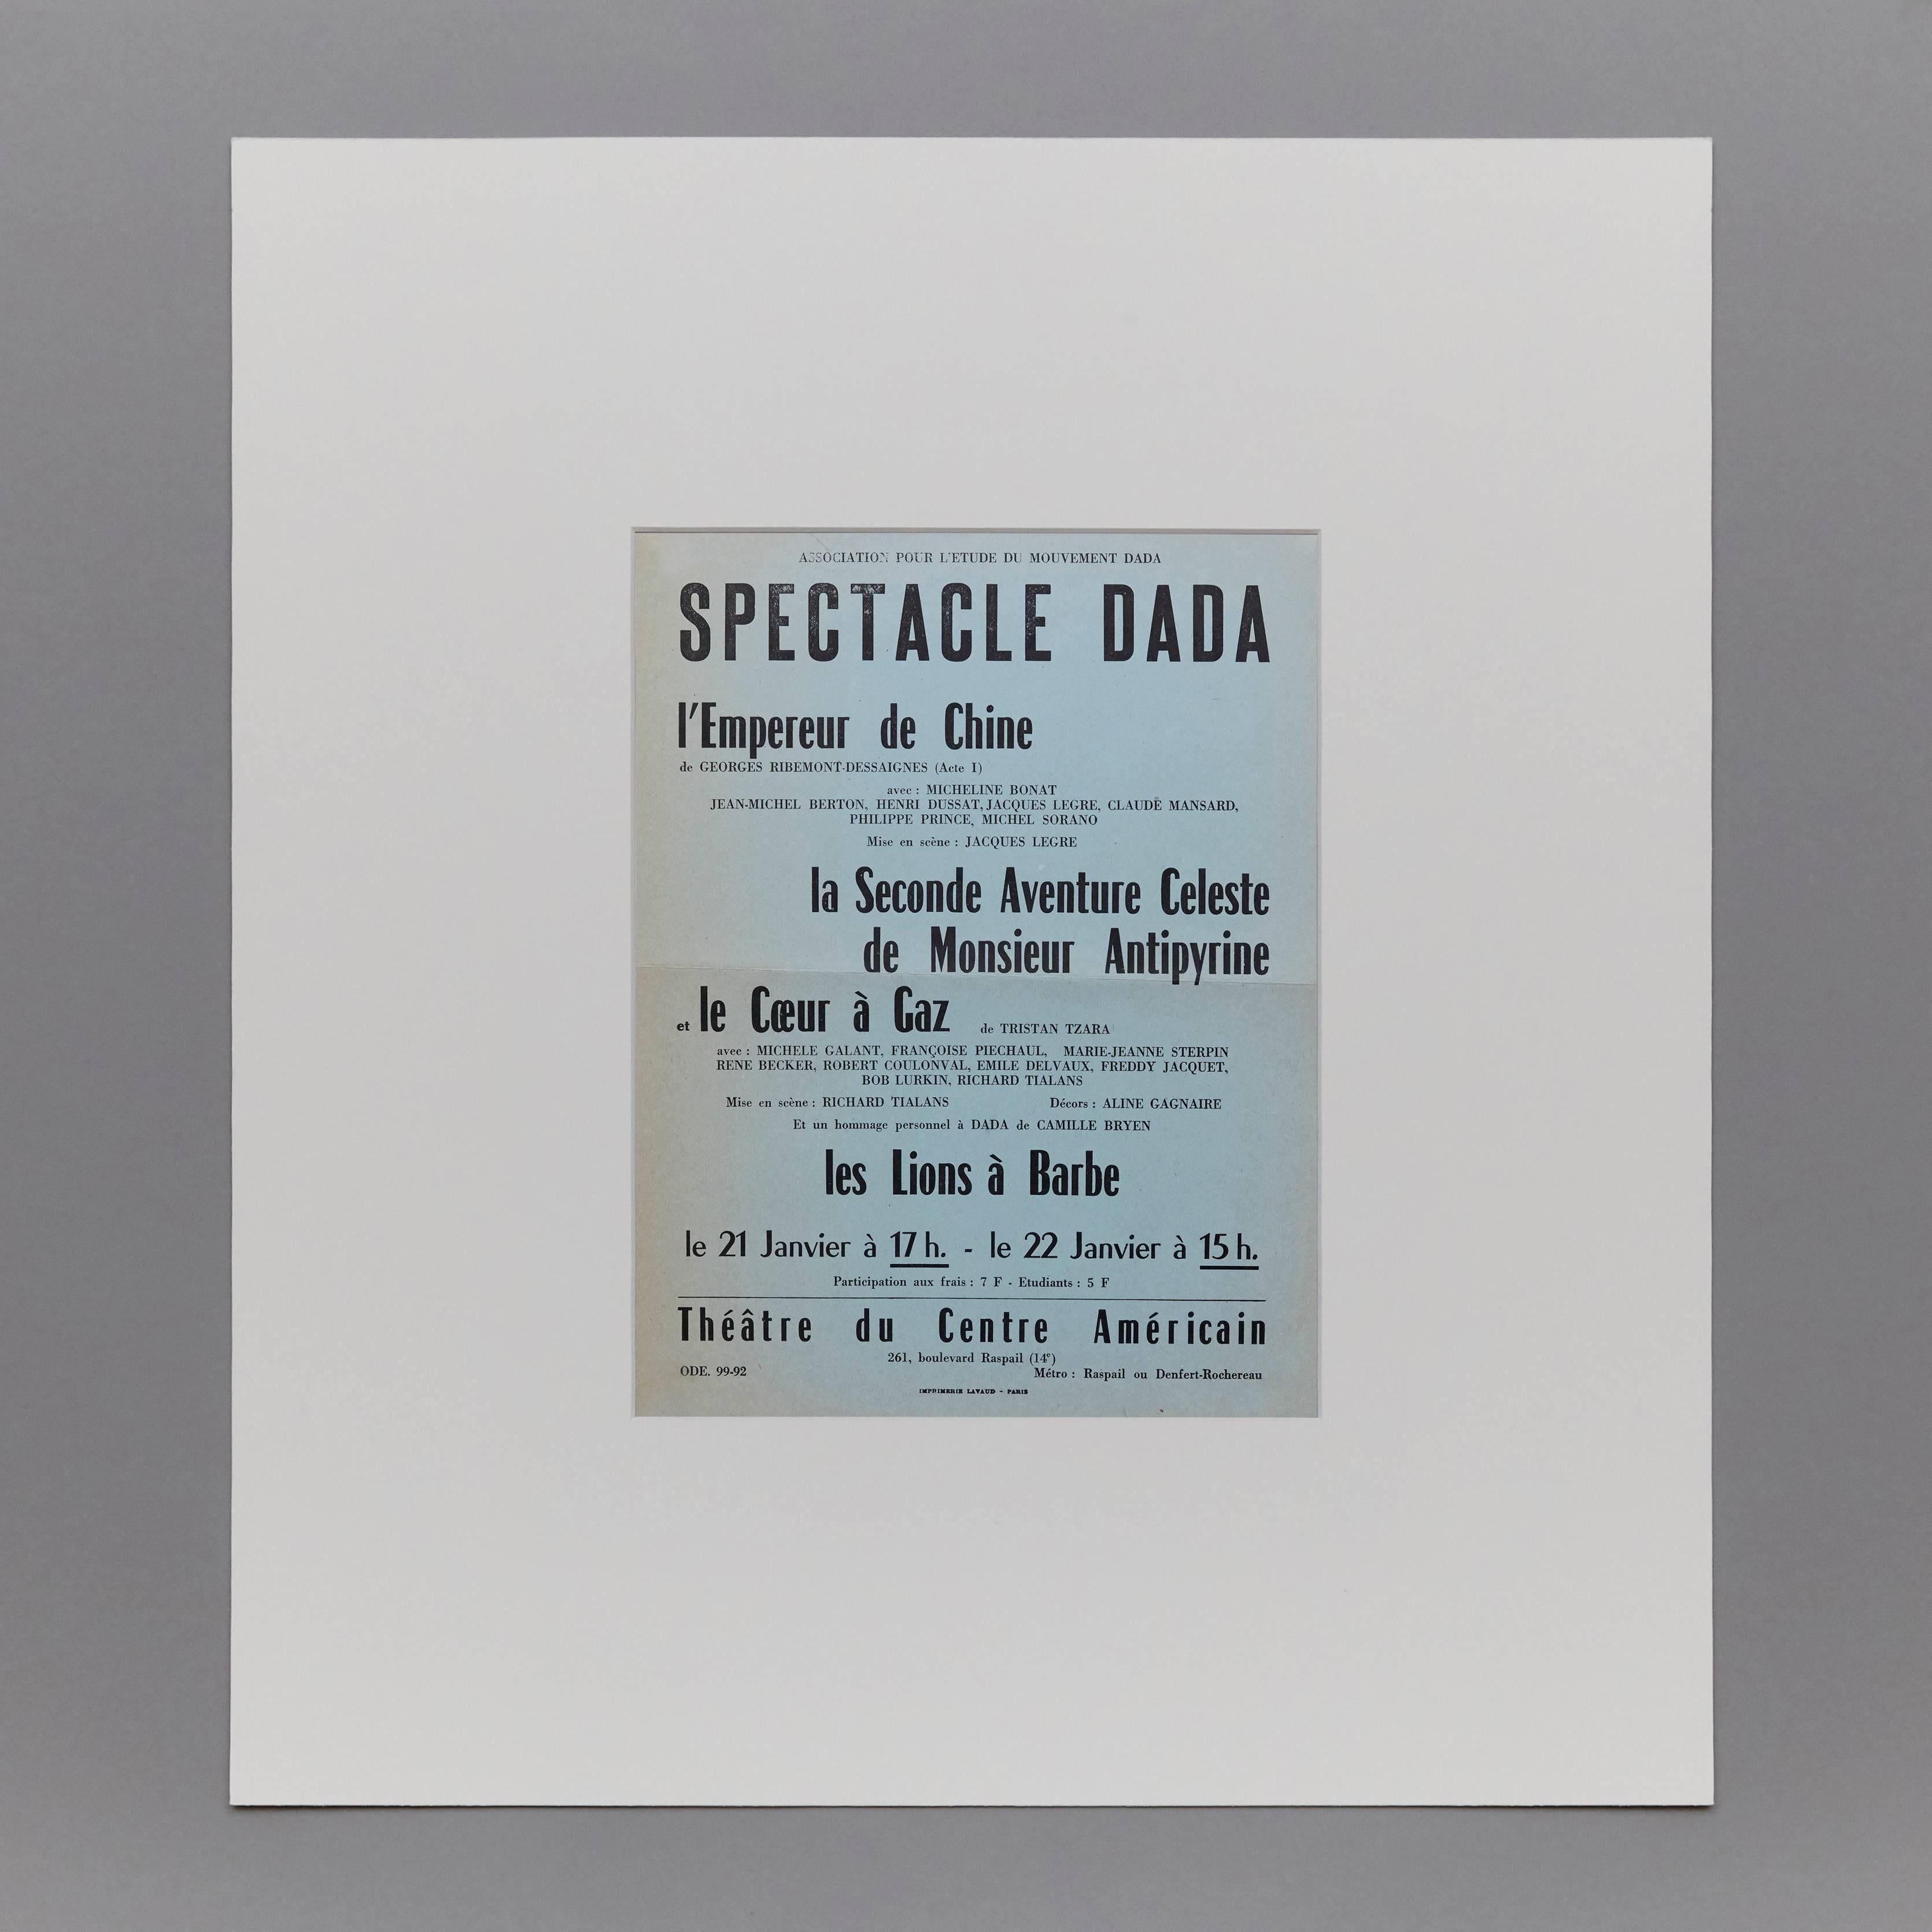 Tract / vintage poster program Spectacle Dada Tristan Tzara Ribemont-Dessaignes Coeur a Gaz Bryen, 1960s.

